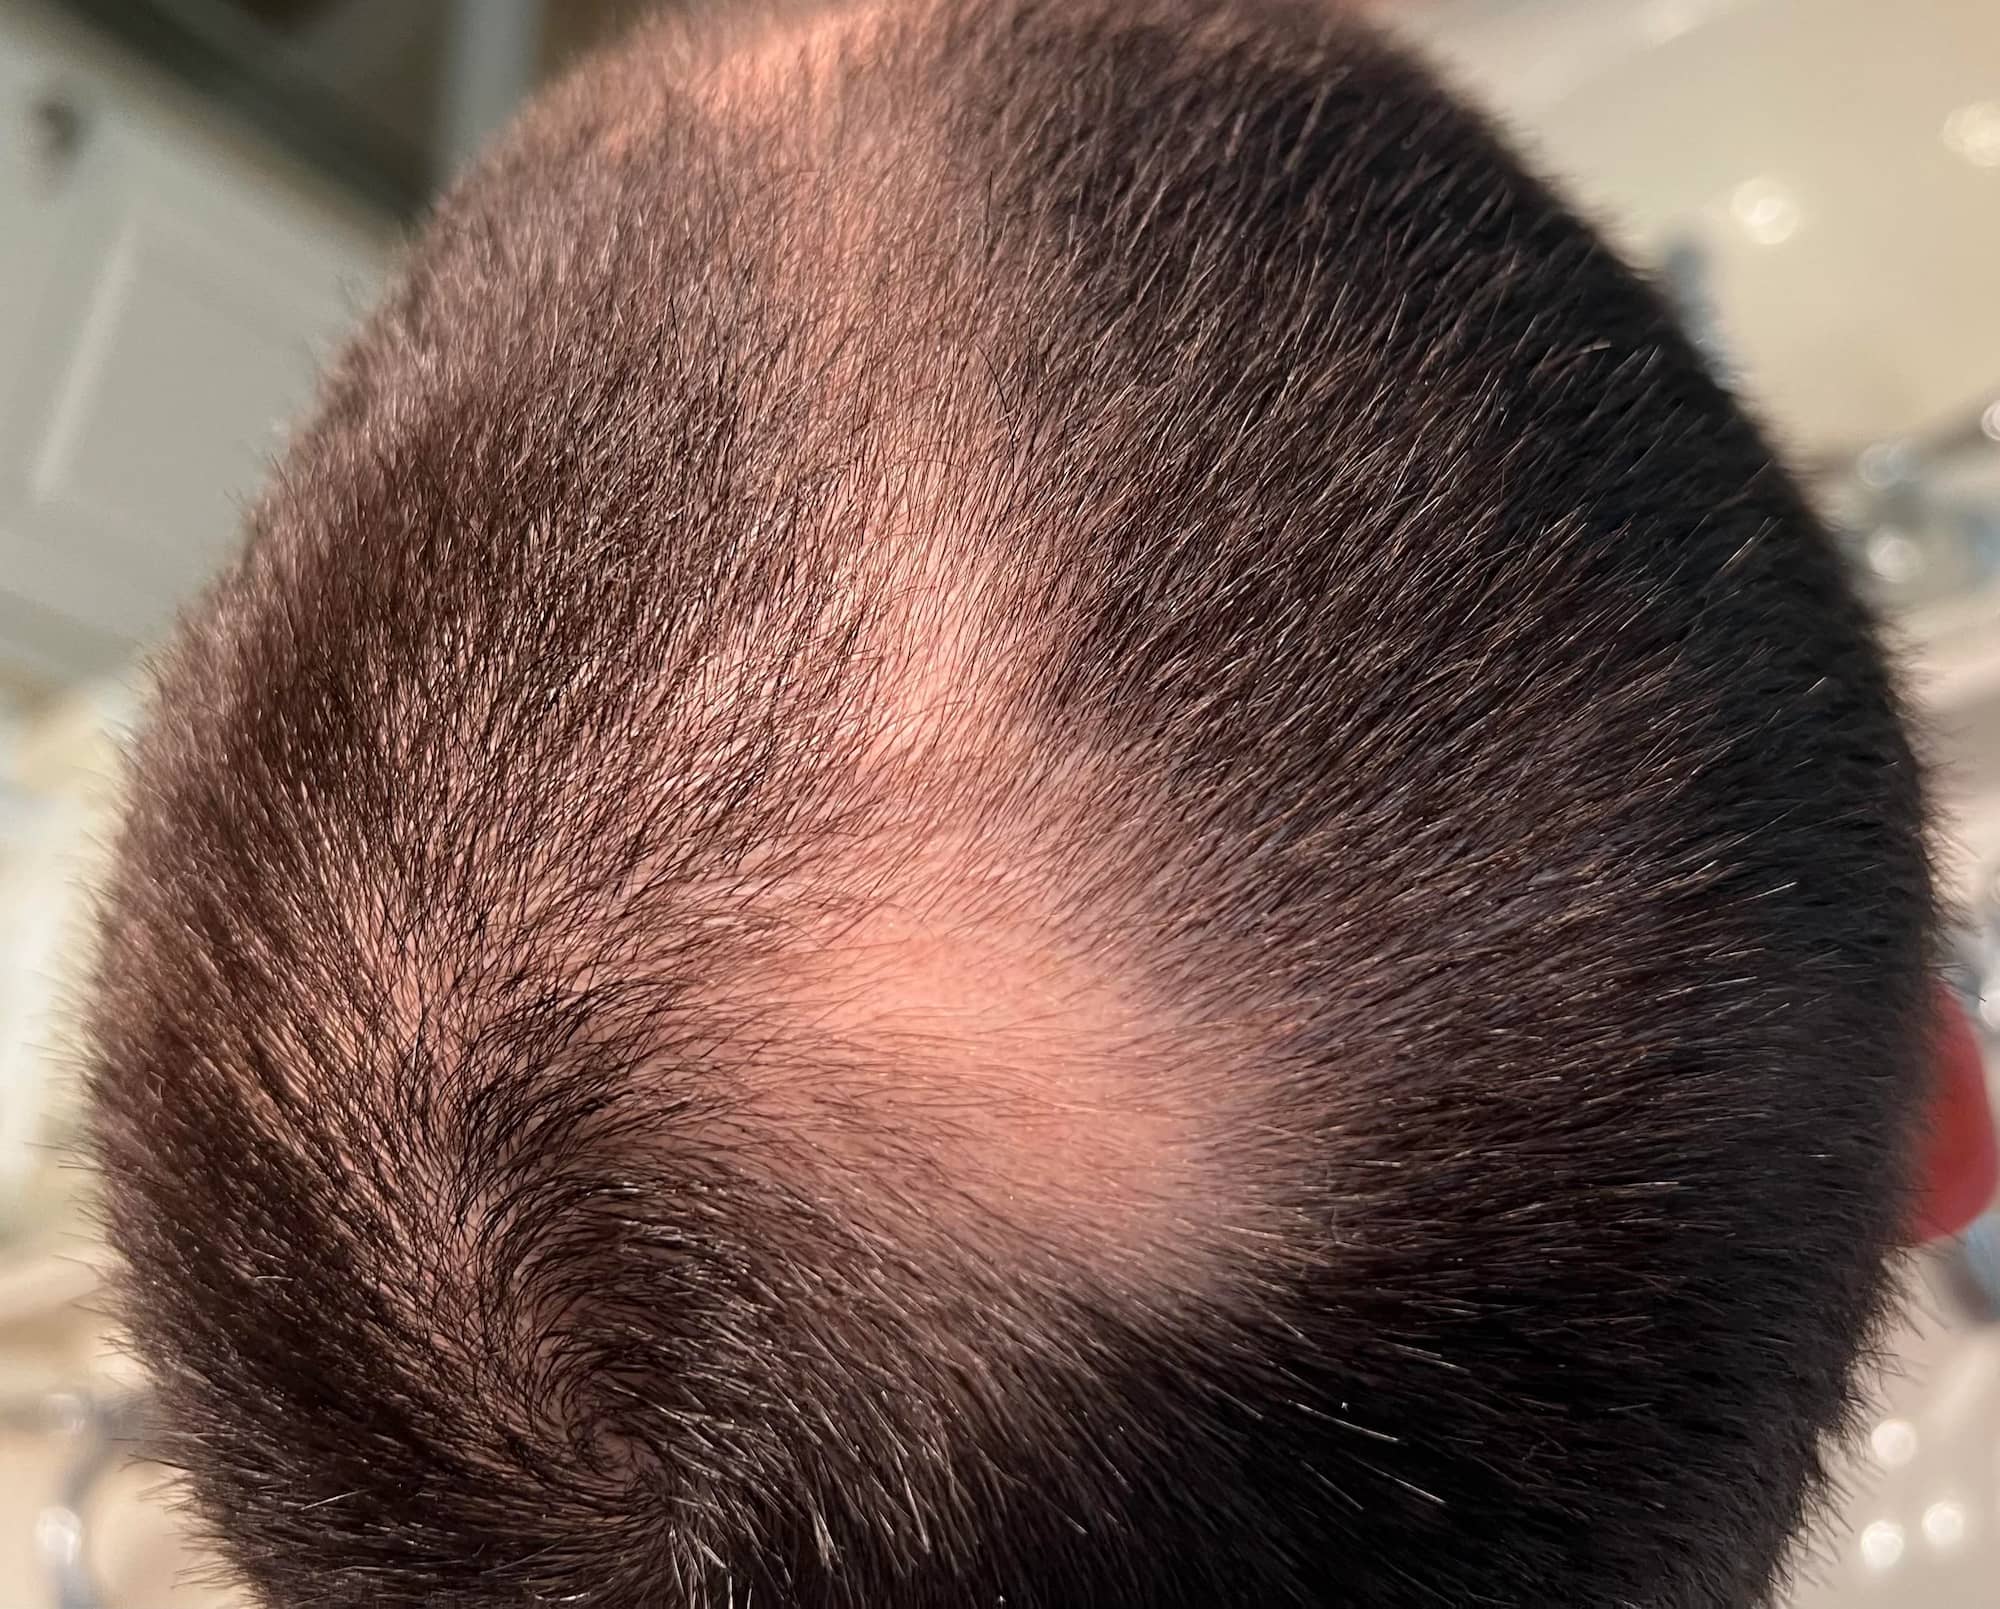 deuruxolitinib alopecia areata results 15 - Alopecia Areata Treatment: What Future Holds